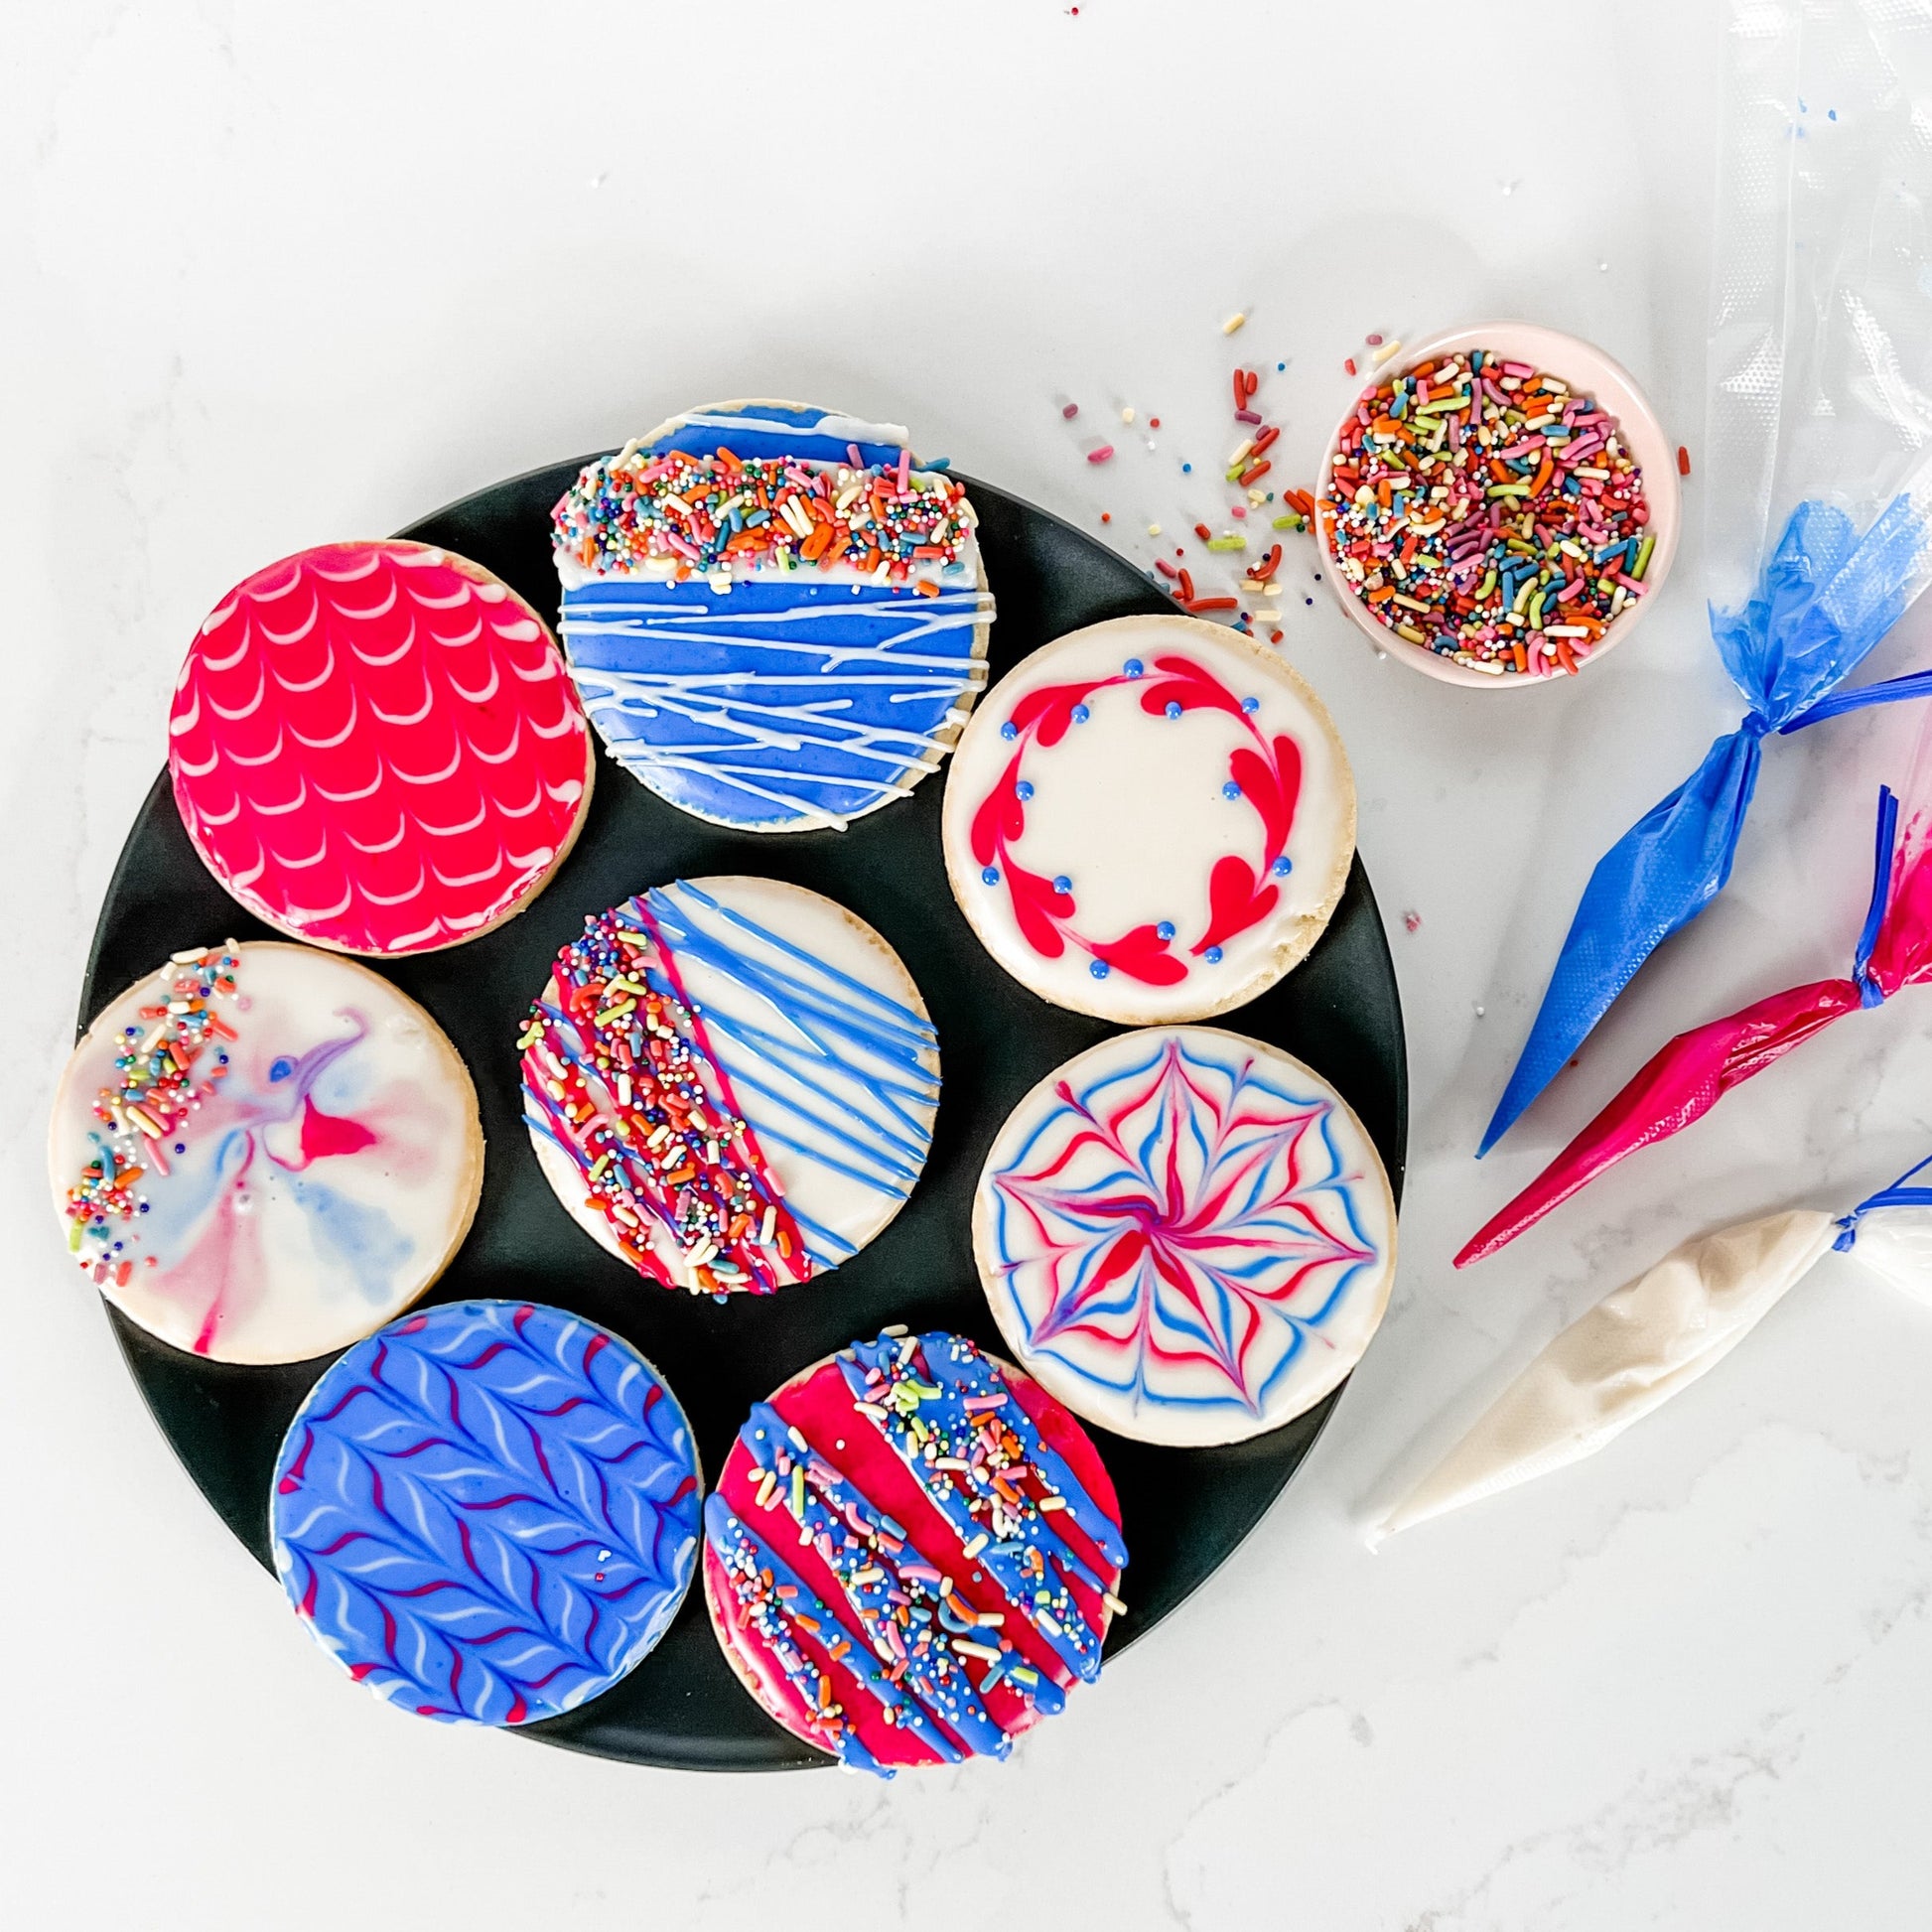 Cookie Decorating Kit with sprinkles